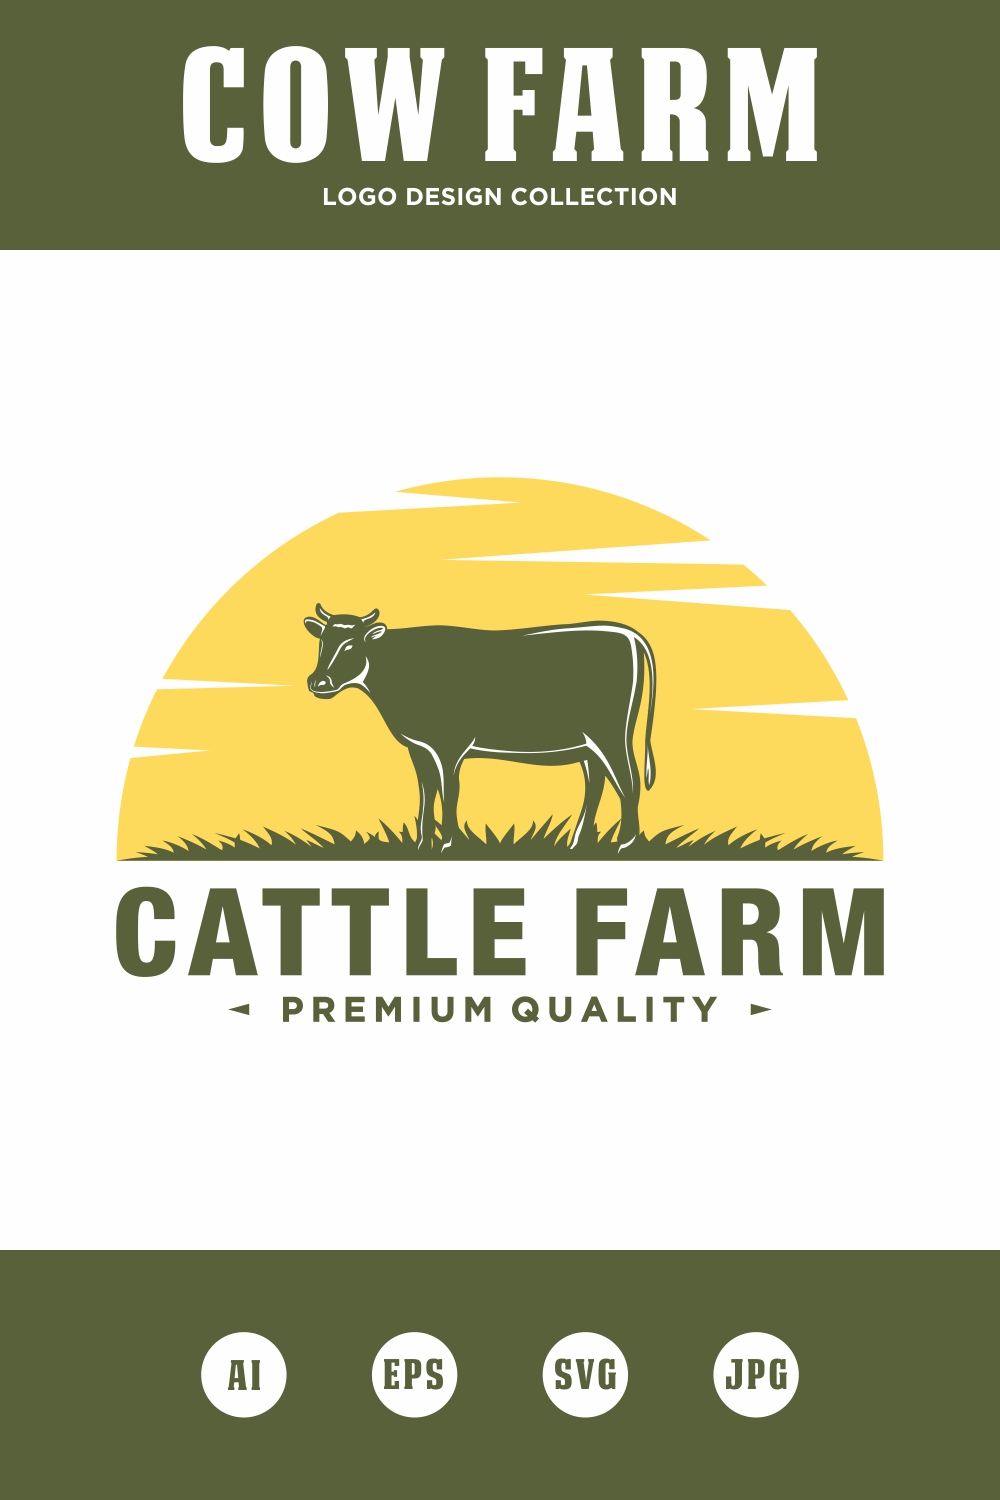 Cattle Farm logo design - only 5$ pinterest preview image.